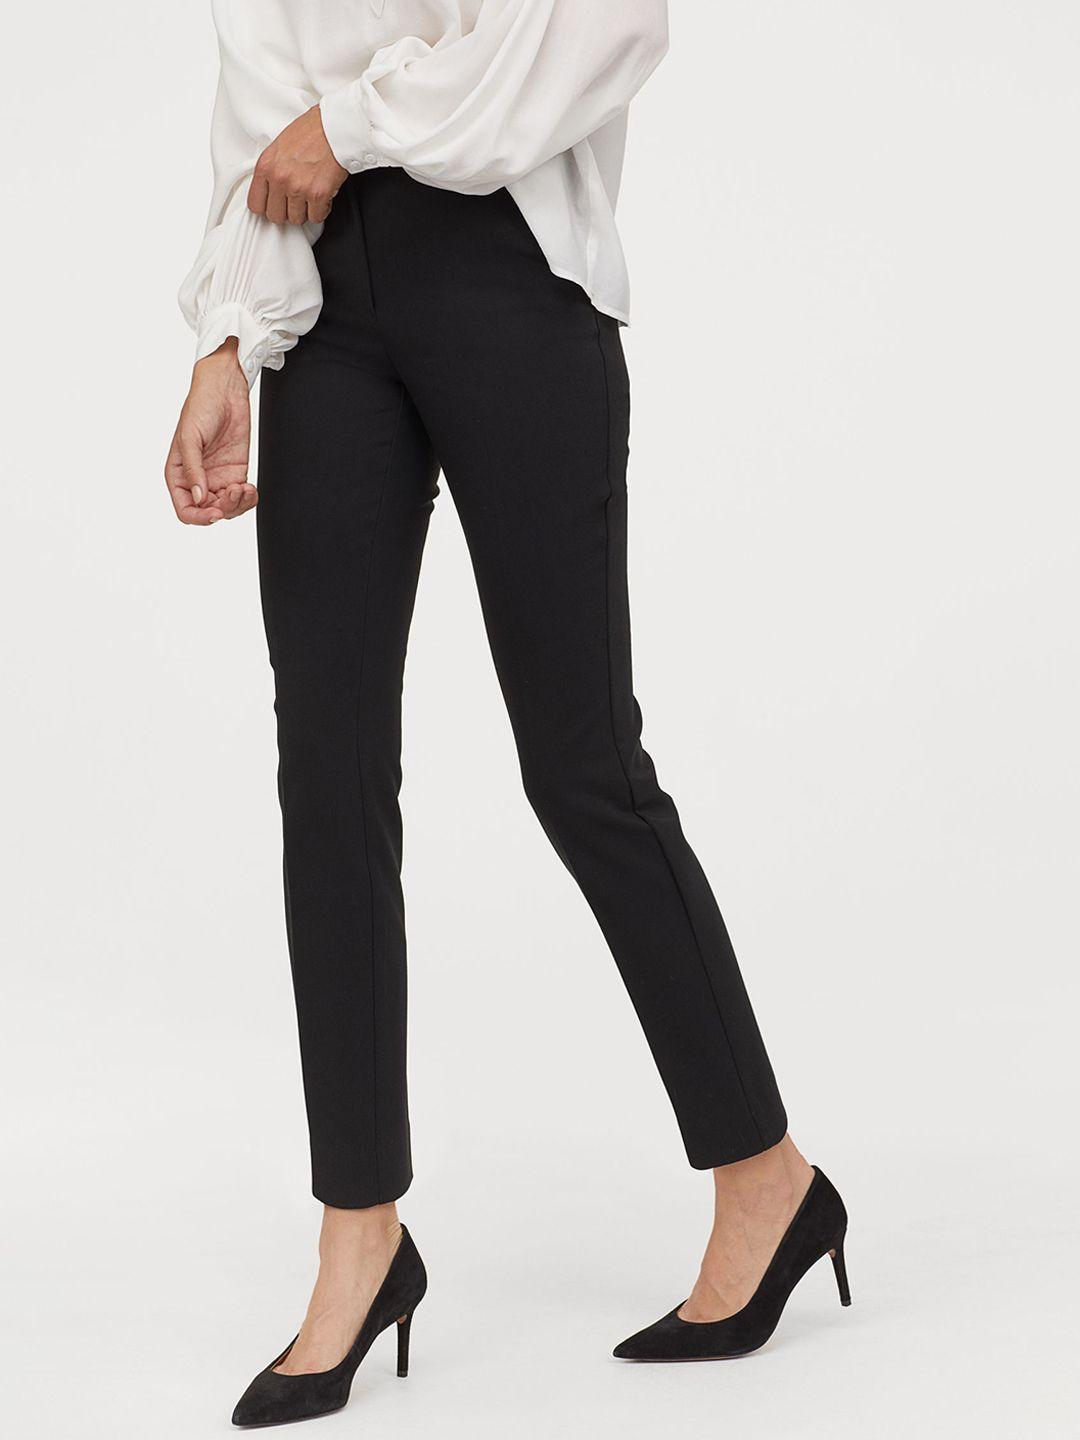 h&m-women-black-cigarette-trousers